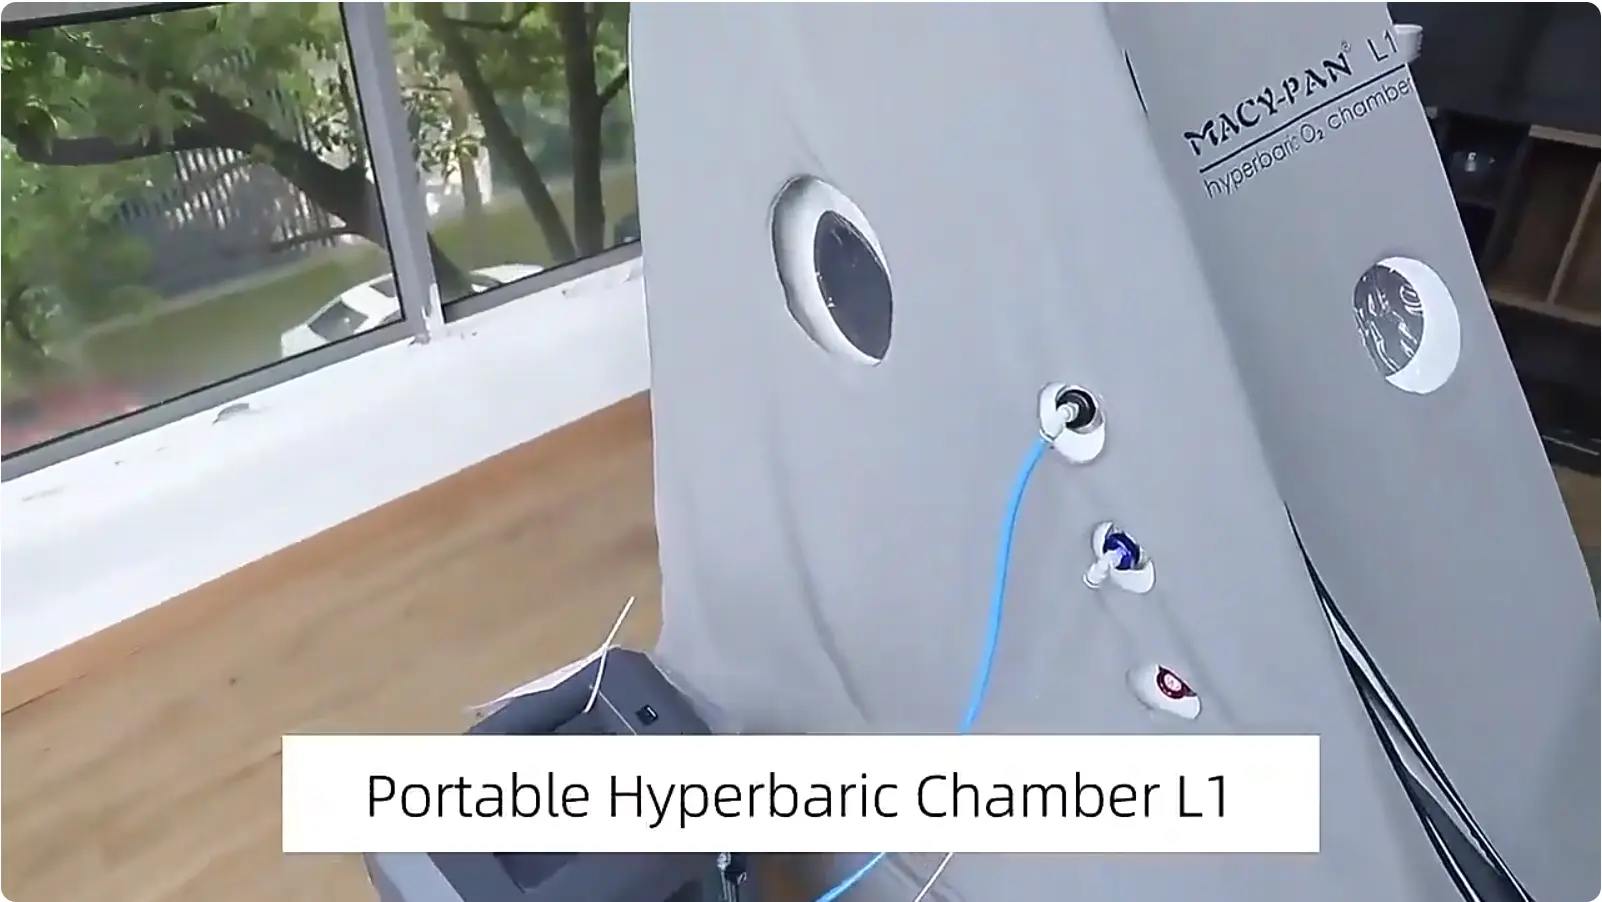 Portable Hyperbaric Chamber L1